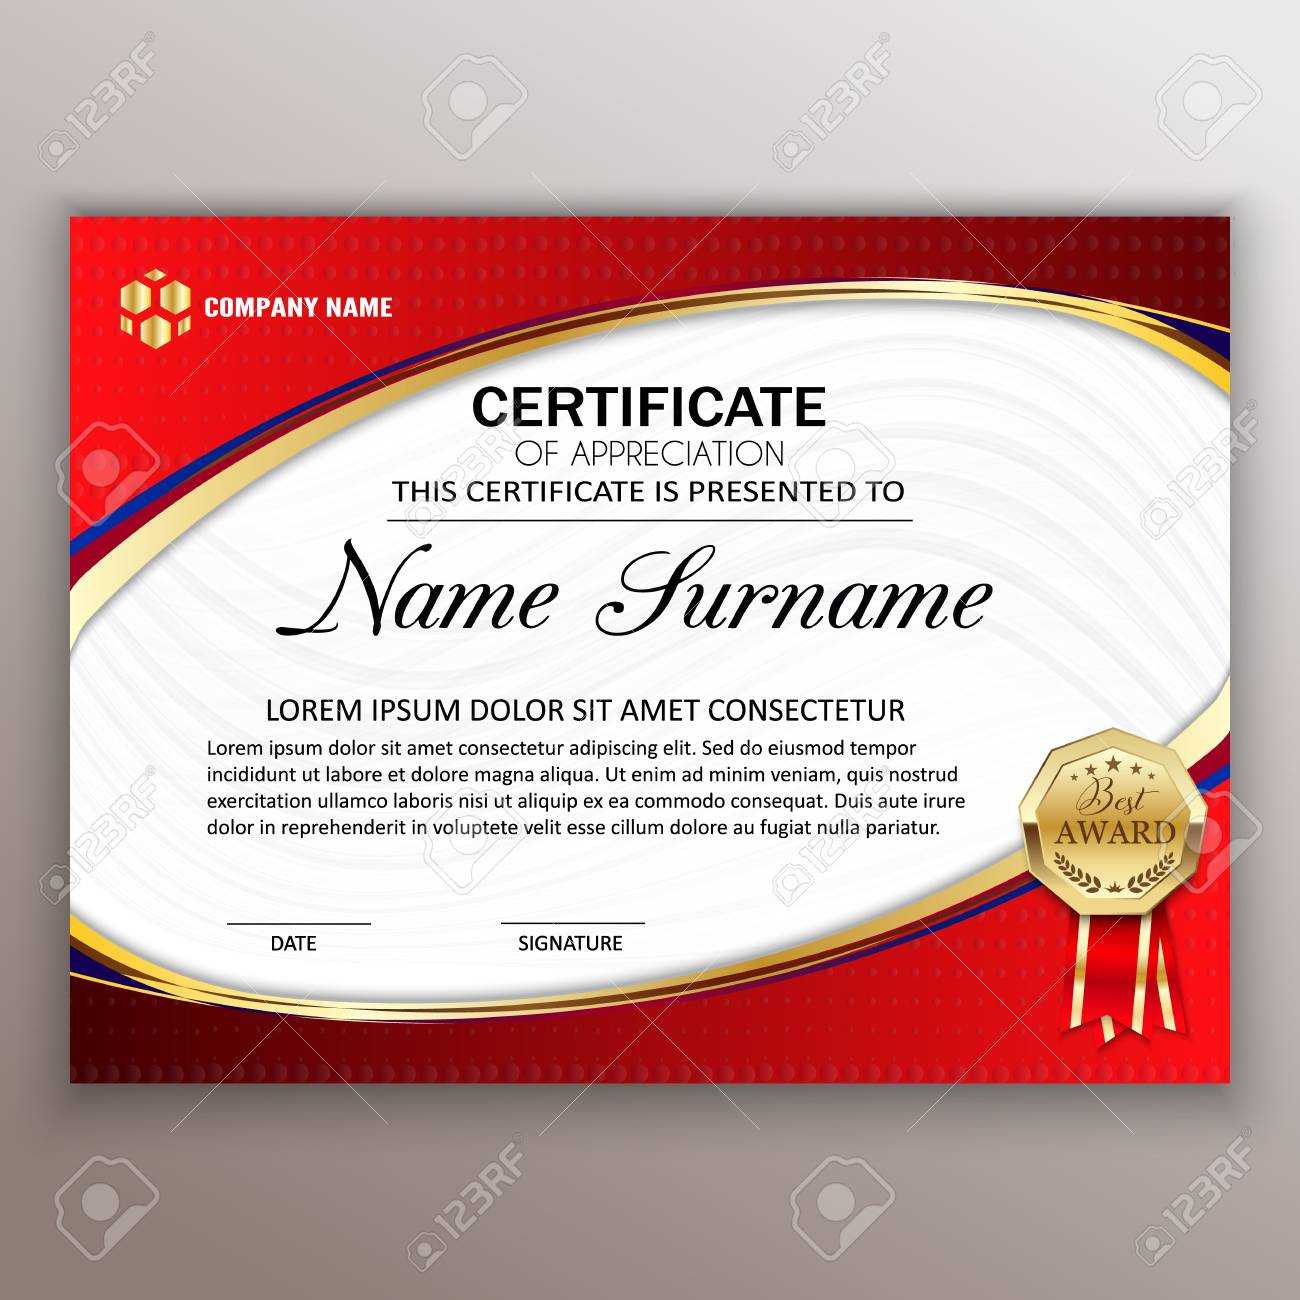 Beautiful Certificate Template Design With Best Award Symbol With Regard To Beautiful Certificate Templates